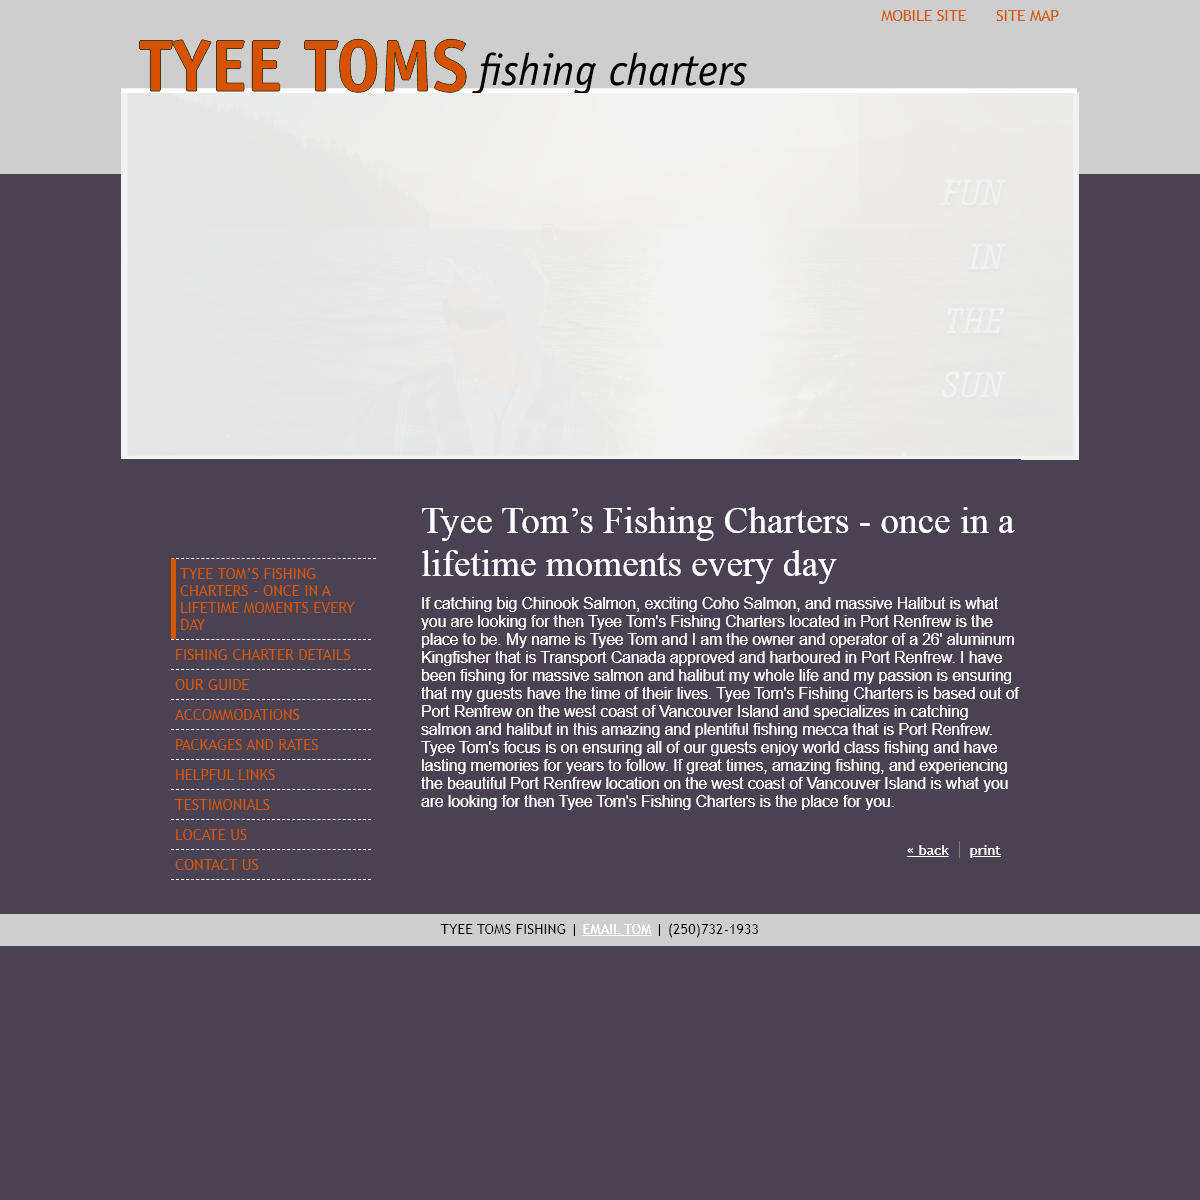 A complete backup of tyeetomsfishing.com